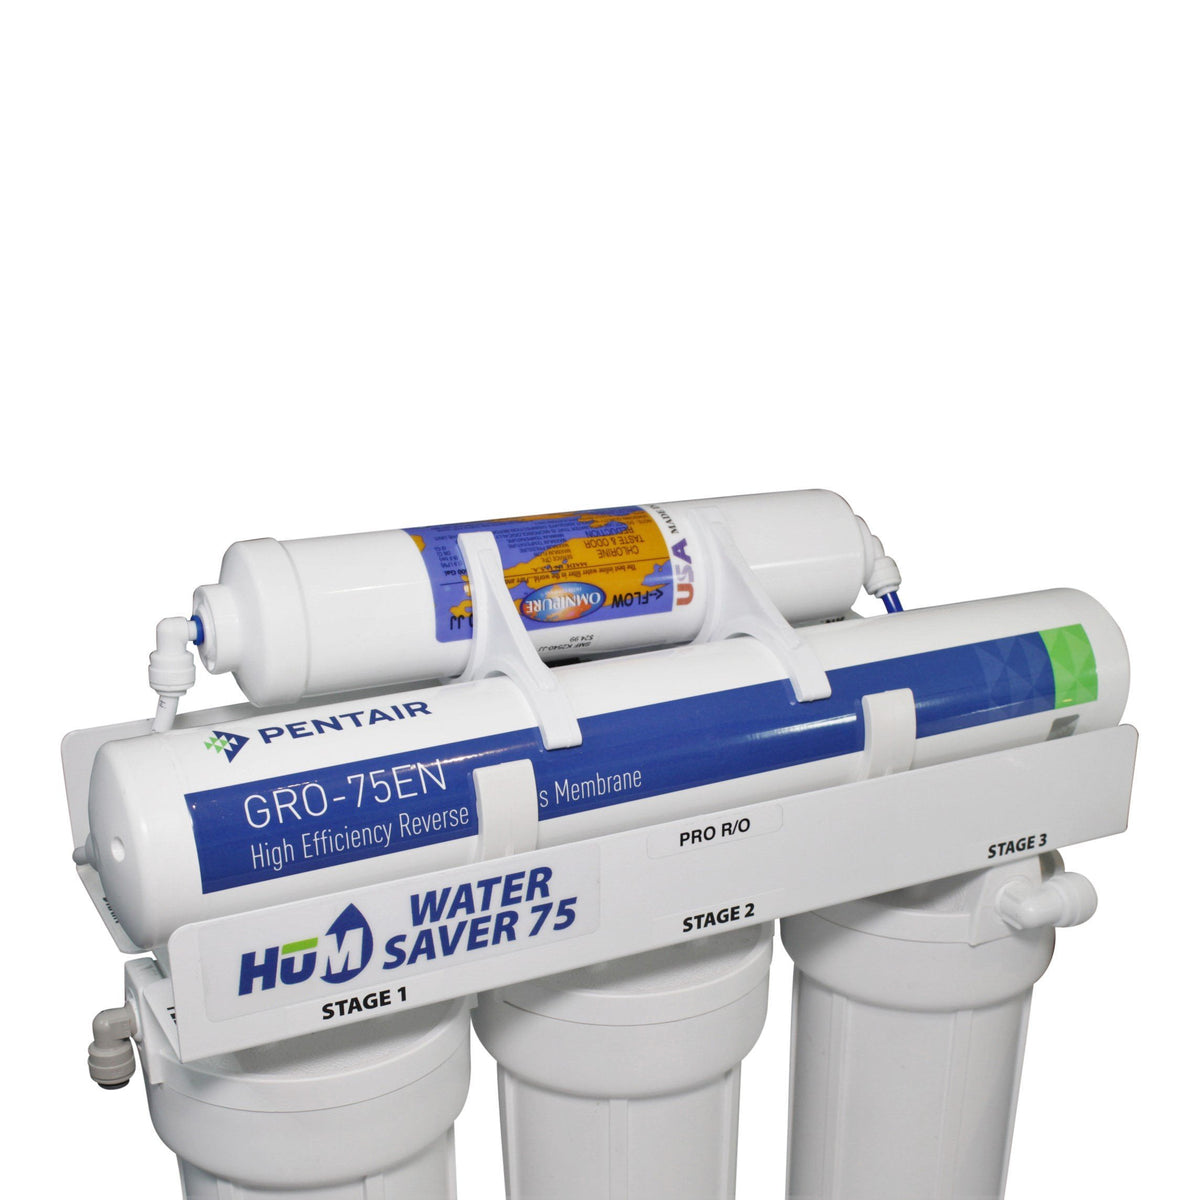 HUM Water Saver 75 gpd Reverse Osmosis System Top